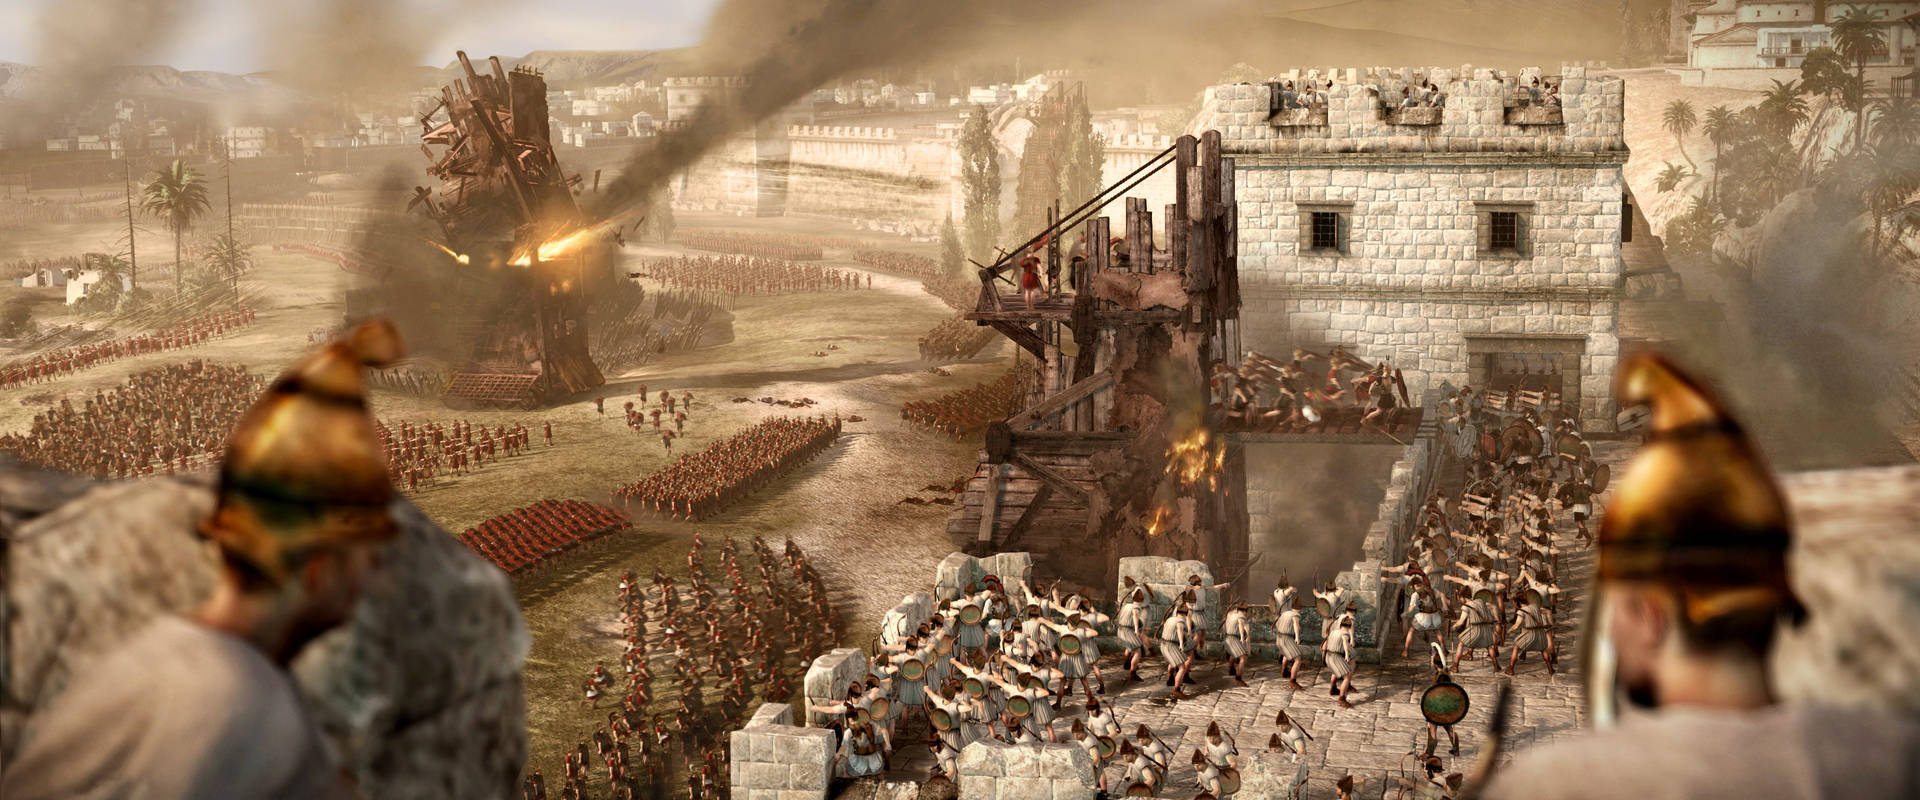 Total War Rome 2 Computer Game